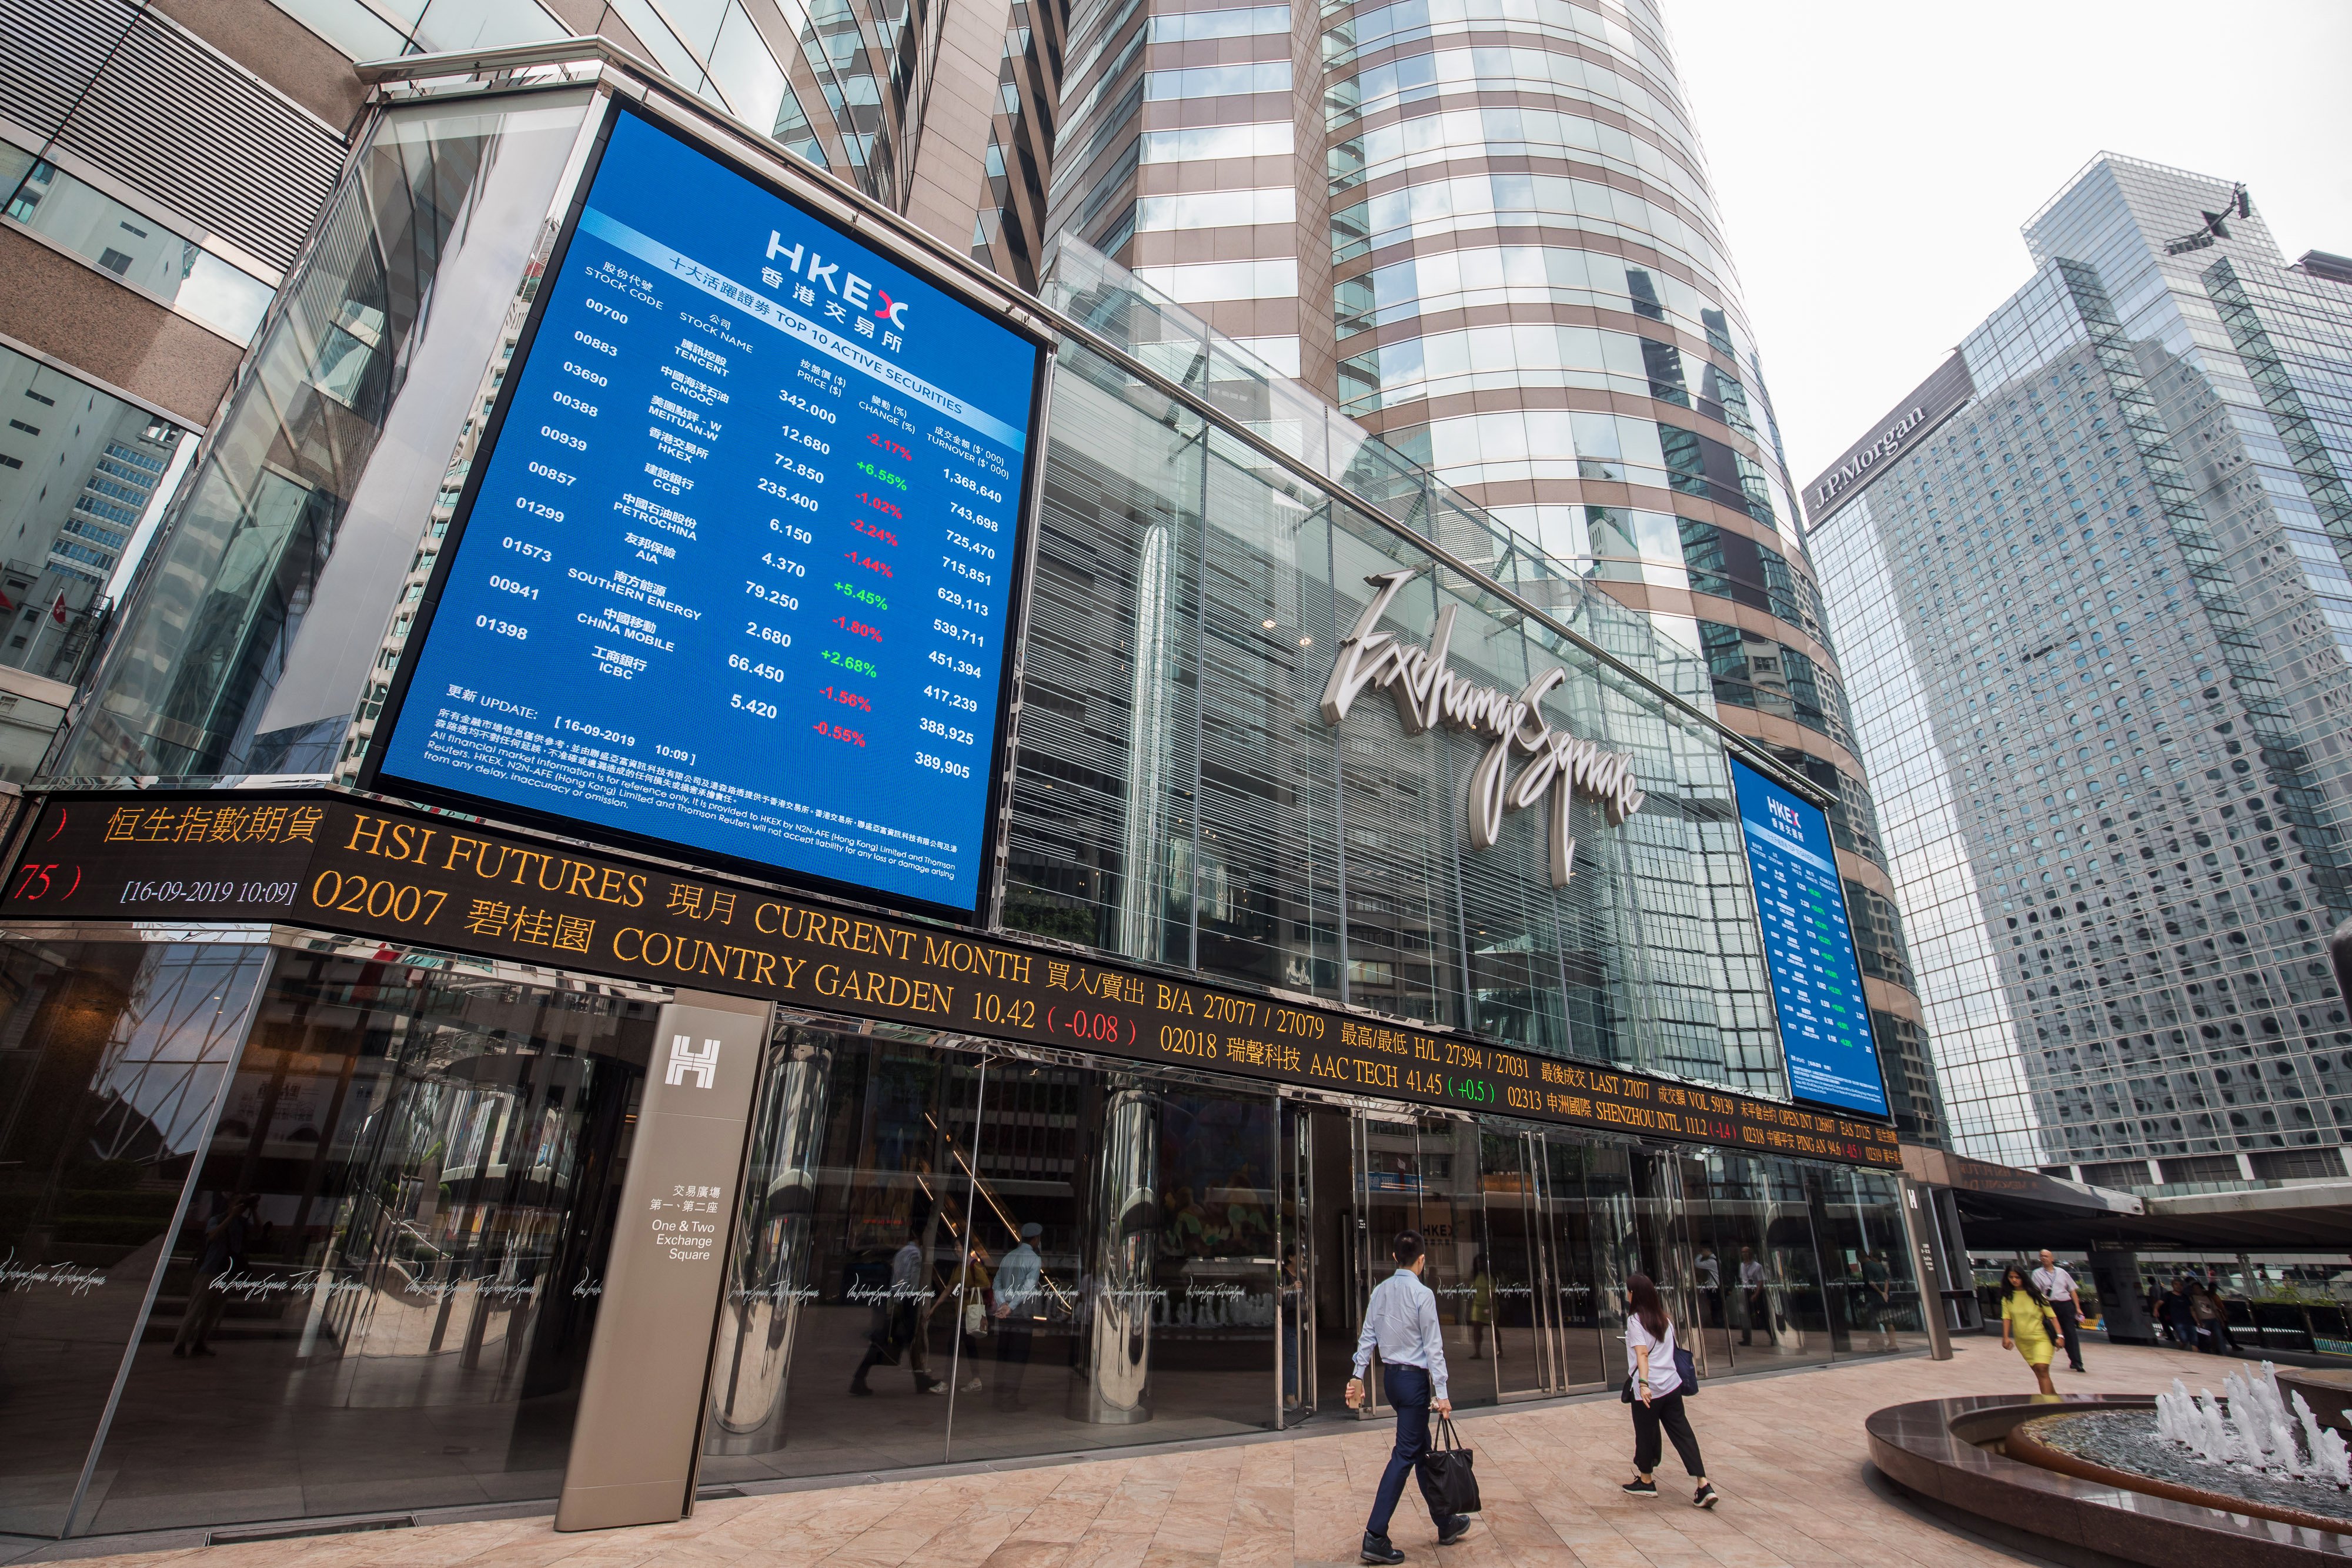 Companies hong kong. Hong Kong Exchange. HKEX Гонконг. Шанхайская фондовая биржа здание. Hong Kong stock Exchange (Hong Kong) — $4,97 трлн.